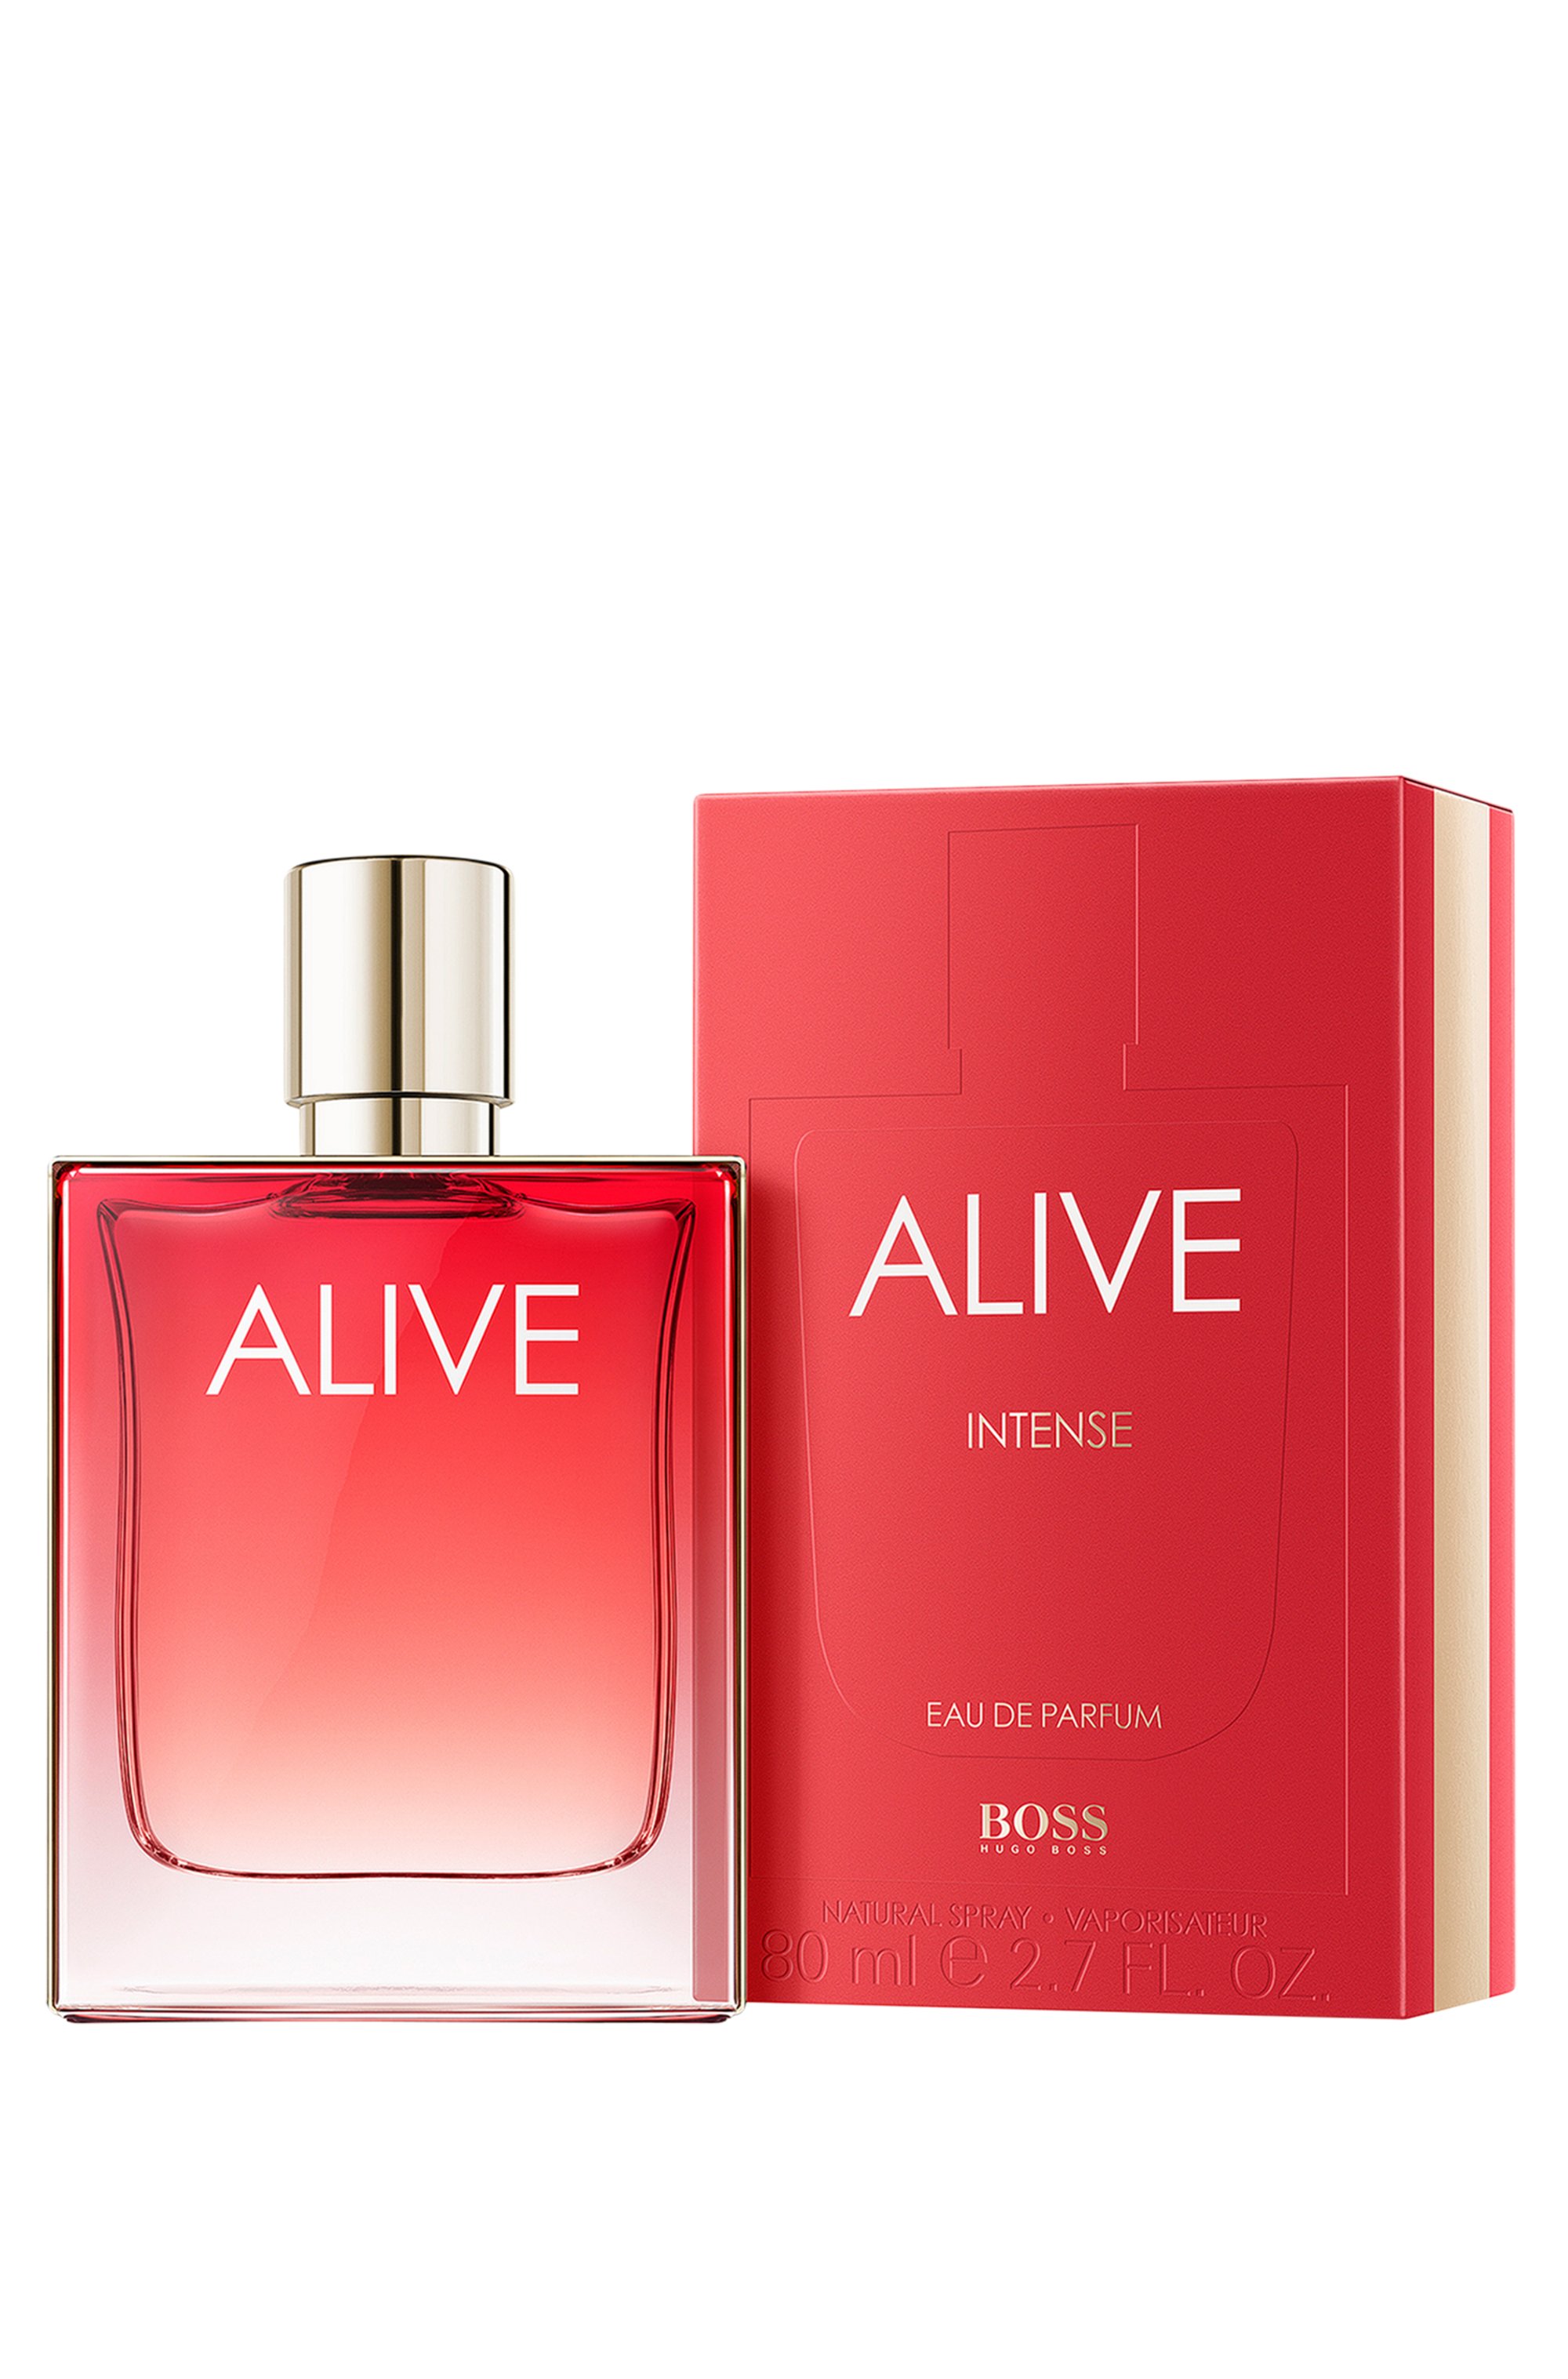 BOSS Alive Intense Eau de Parfum 80 ml, Assorted-Pre-Pack